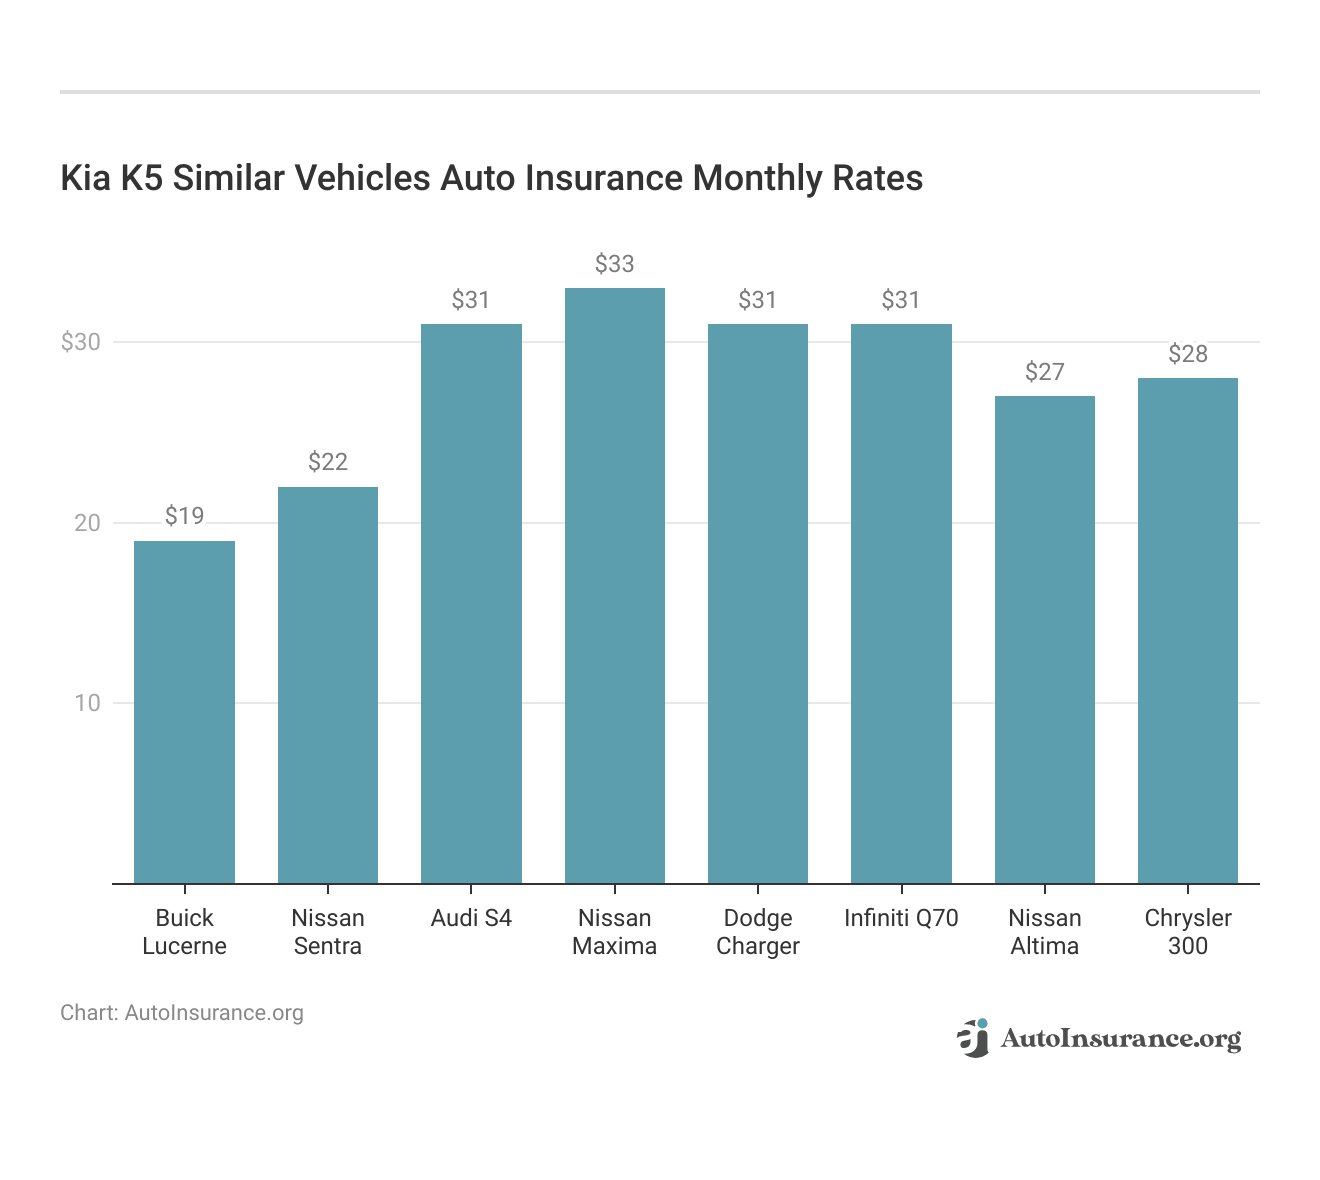 <h3>Kia K5 Similar Vehicles Auto Insurance Monthly Rates</h3>